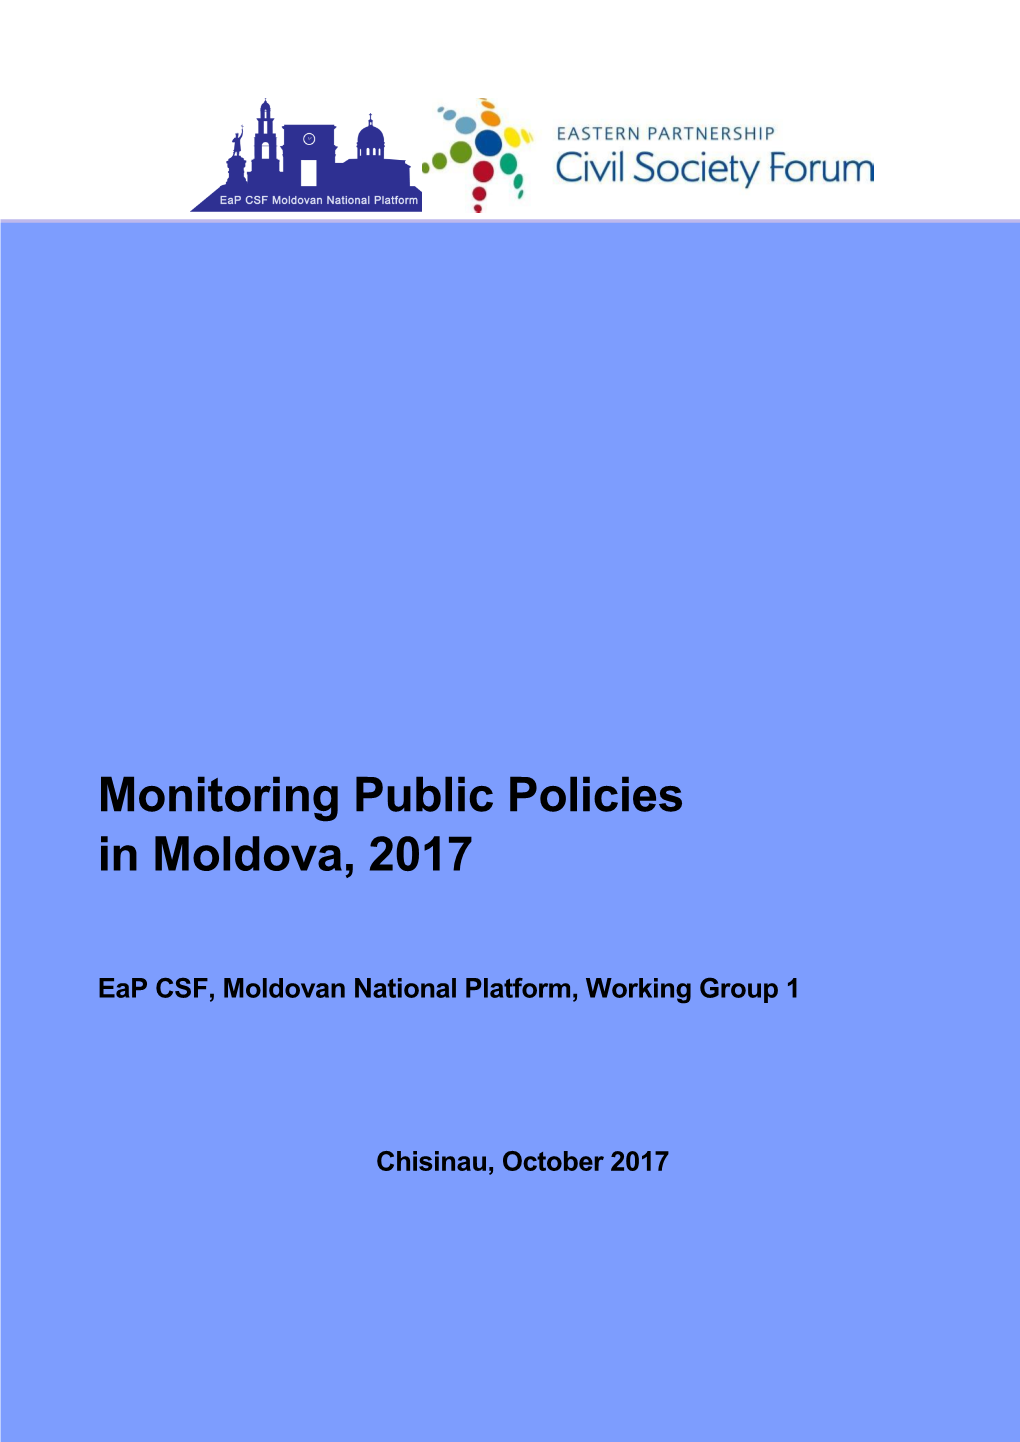 Monitoring Public Policies in Moldova, 2017